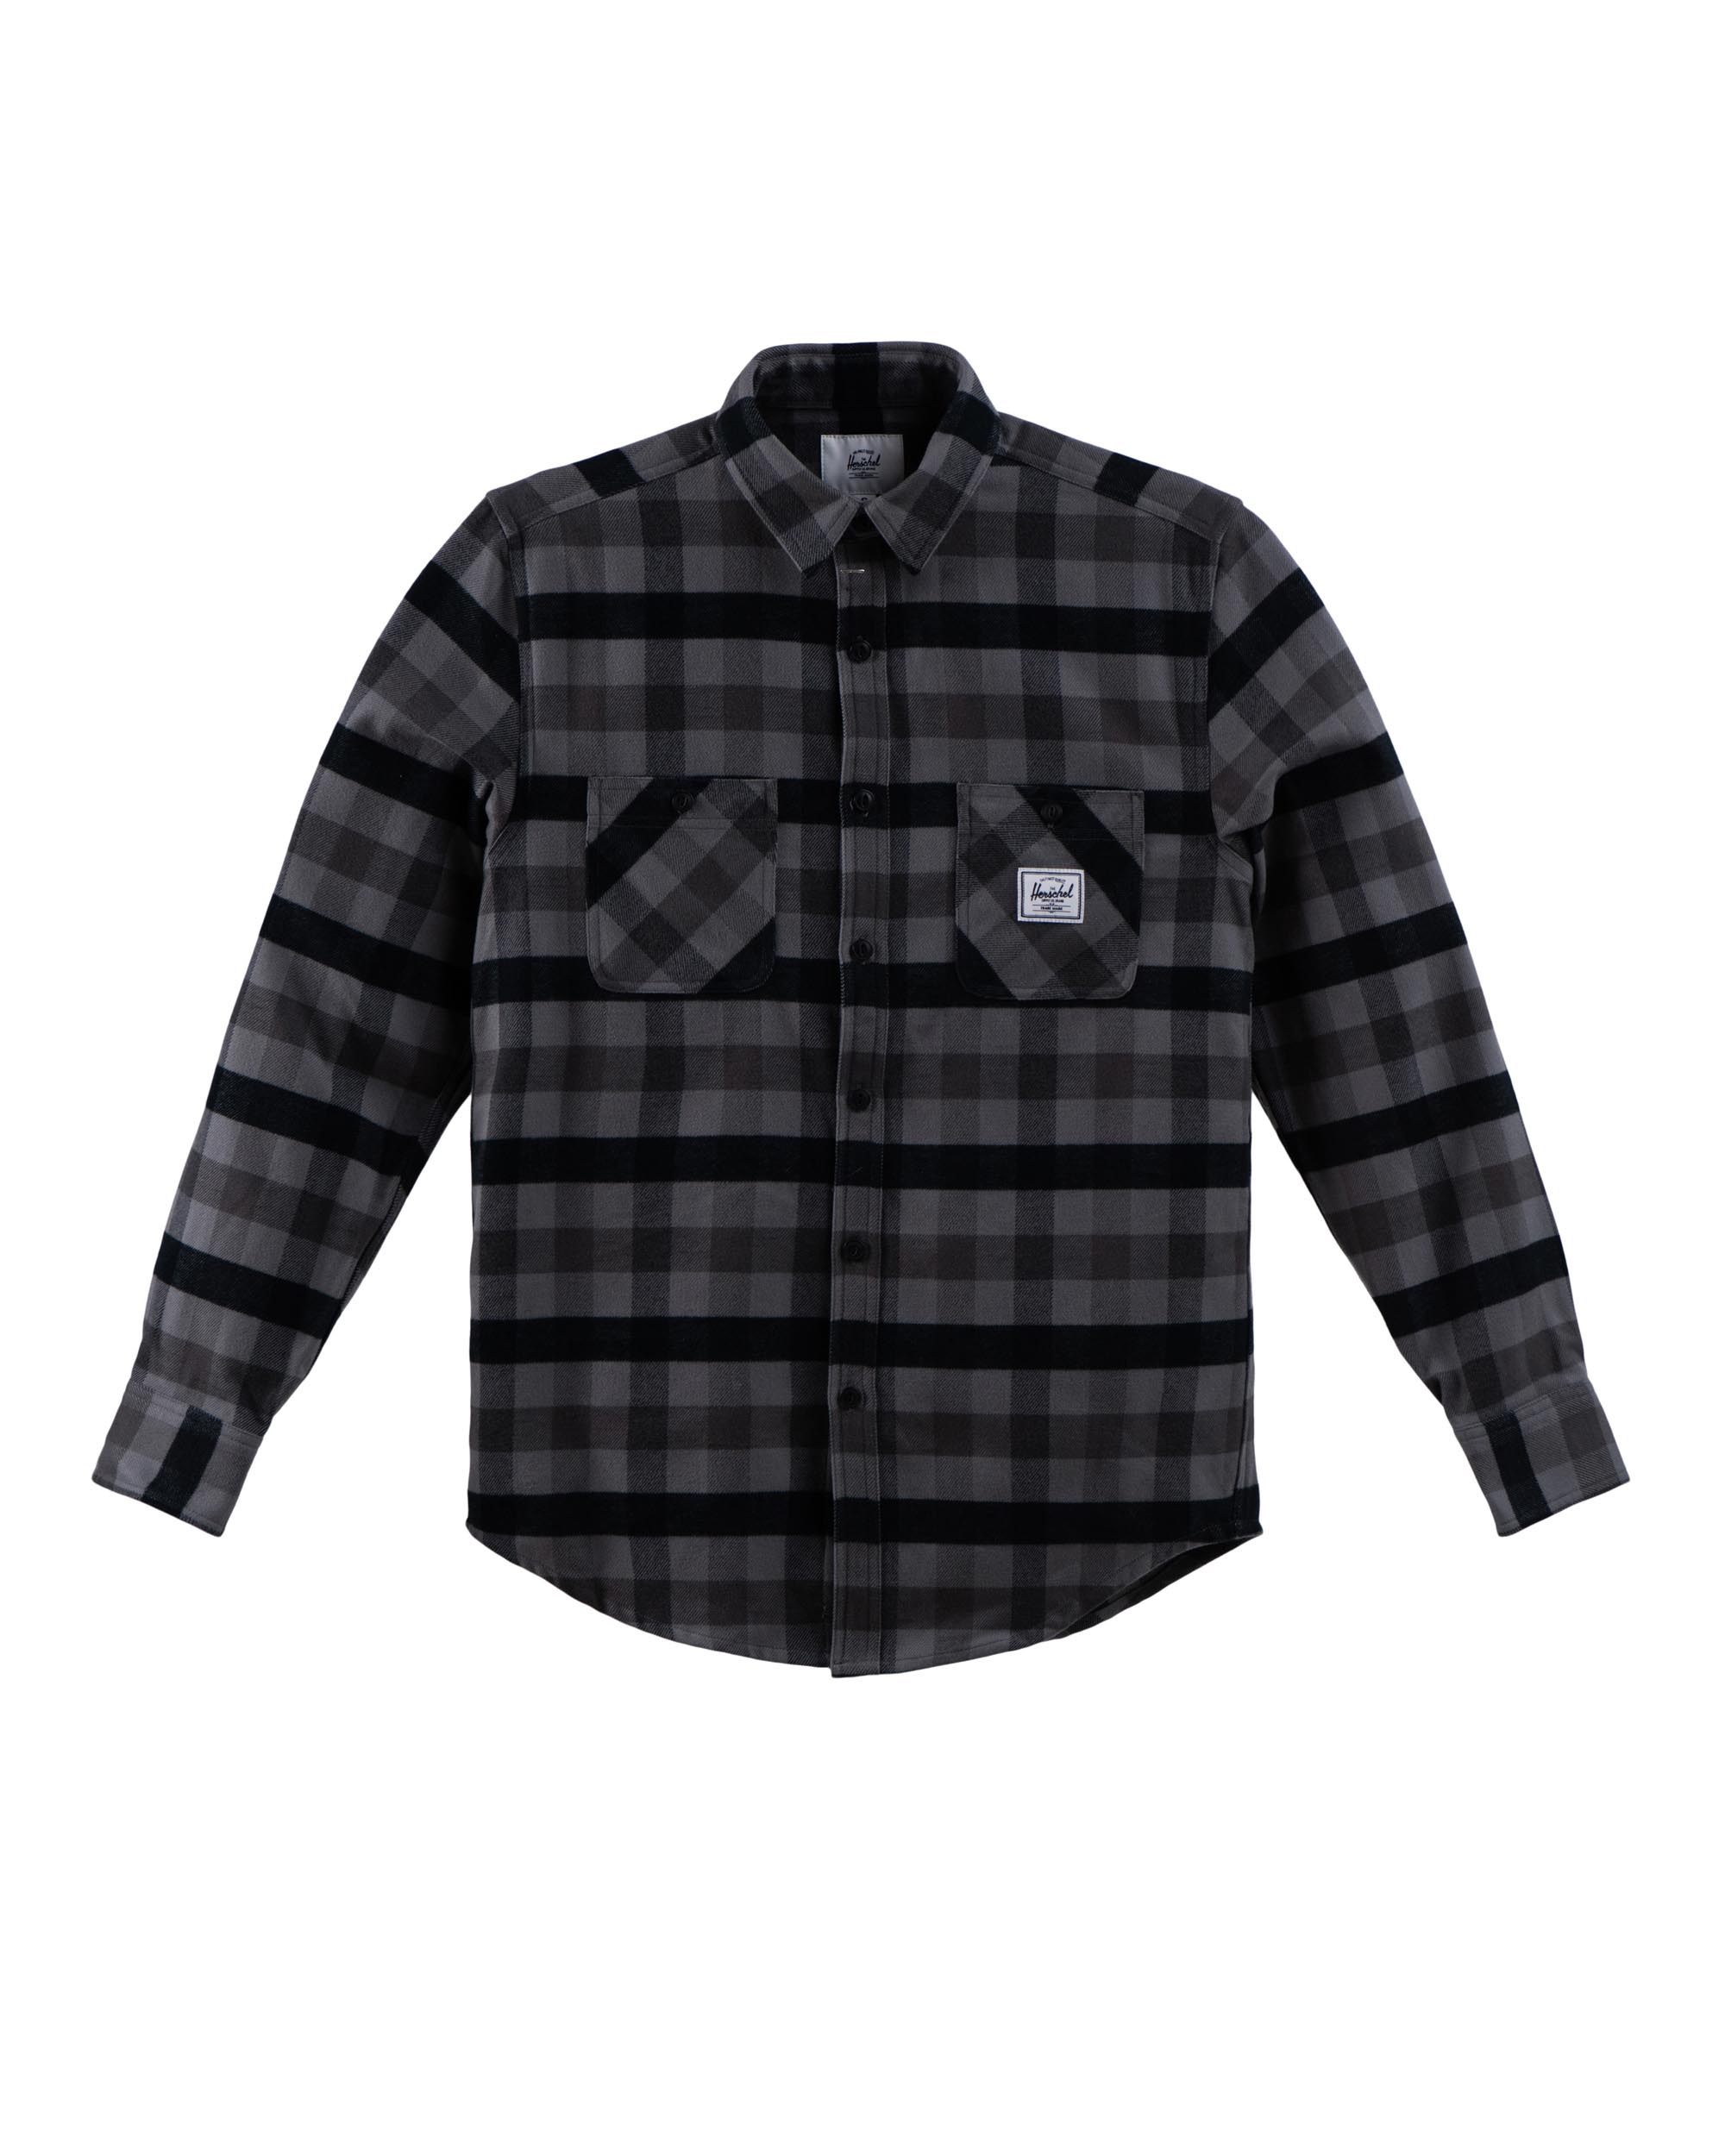 OVY Heavy Flannel Check Shirts L 早春のとっておきセール safetec.com.br